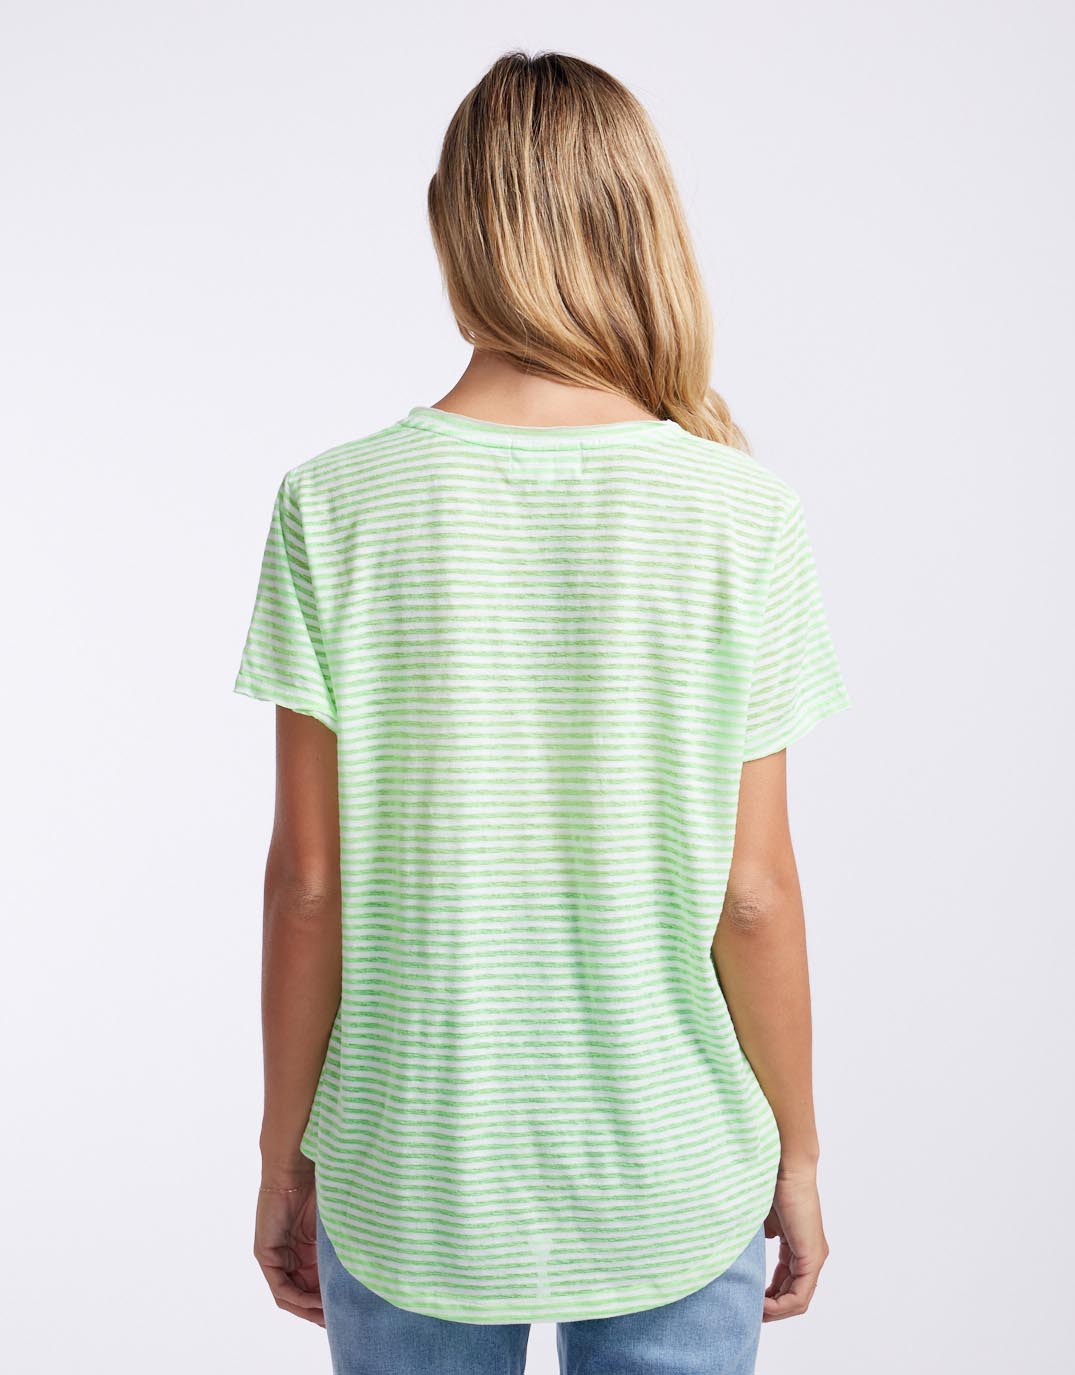 white-co-sorbet-stripe-vee-neck-tee-gelati-green-womens-clothing